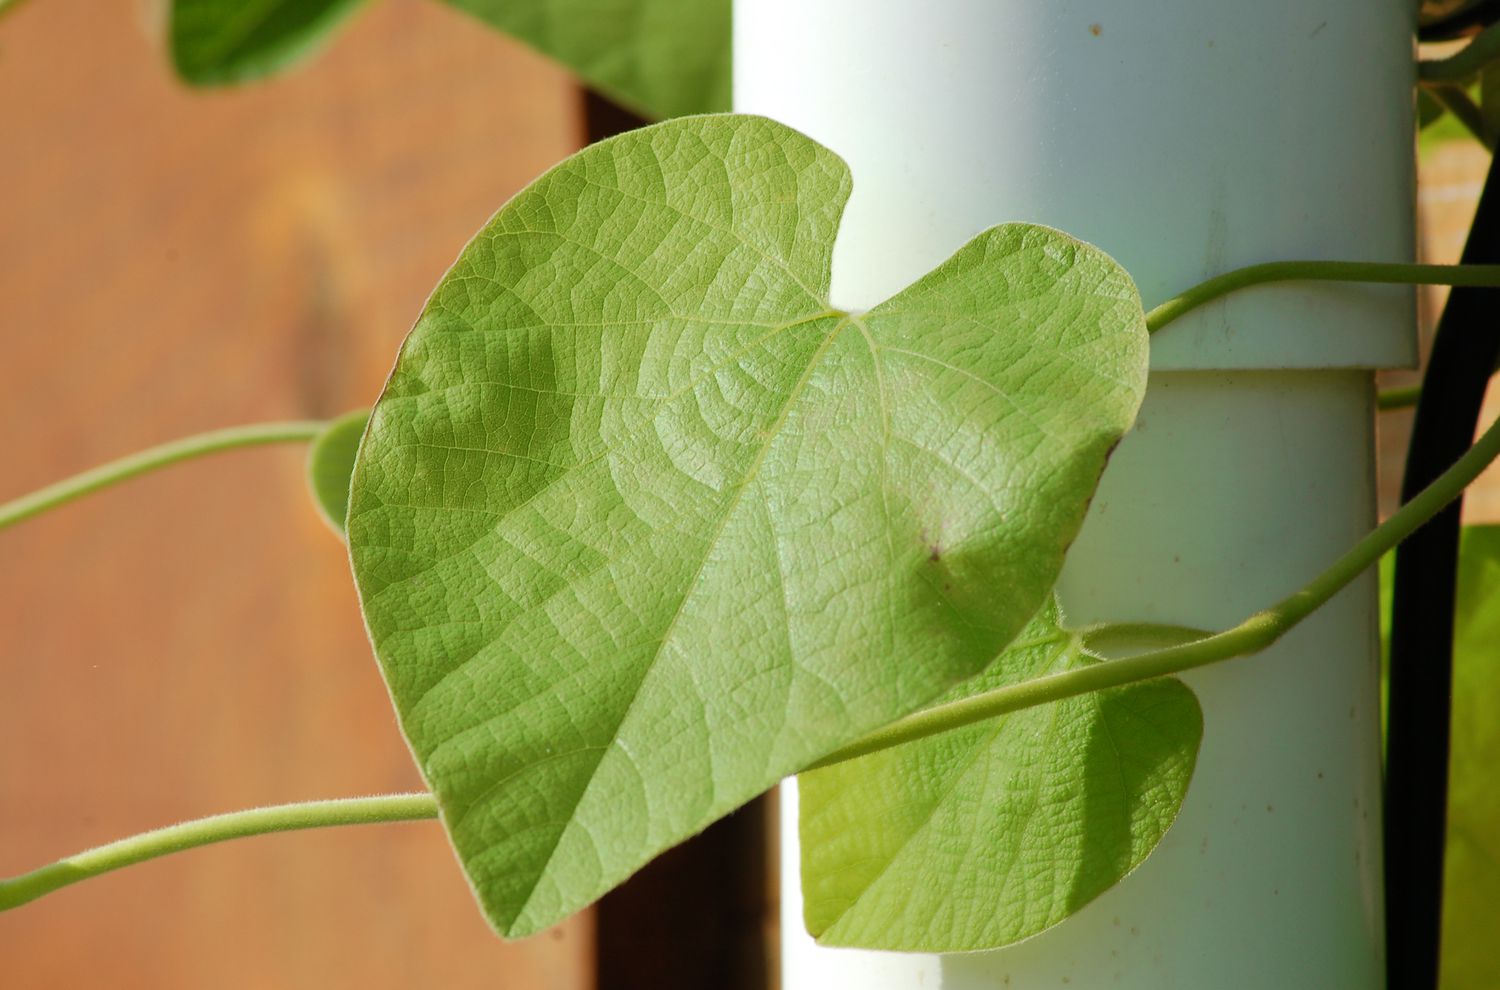 Dutchman's pipe closeup showing heart-shaped leaves.